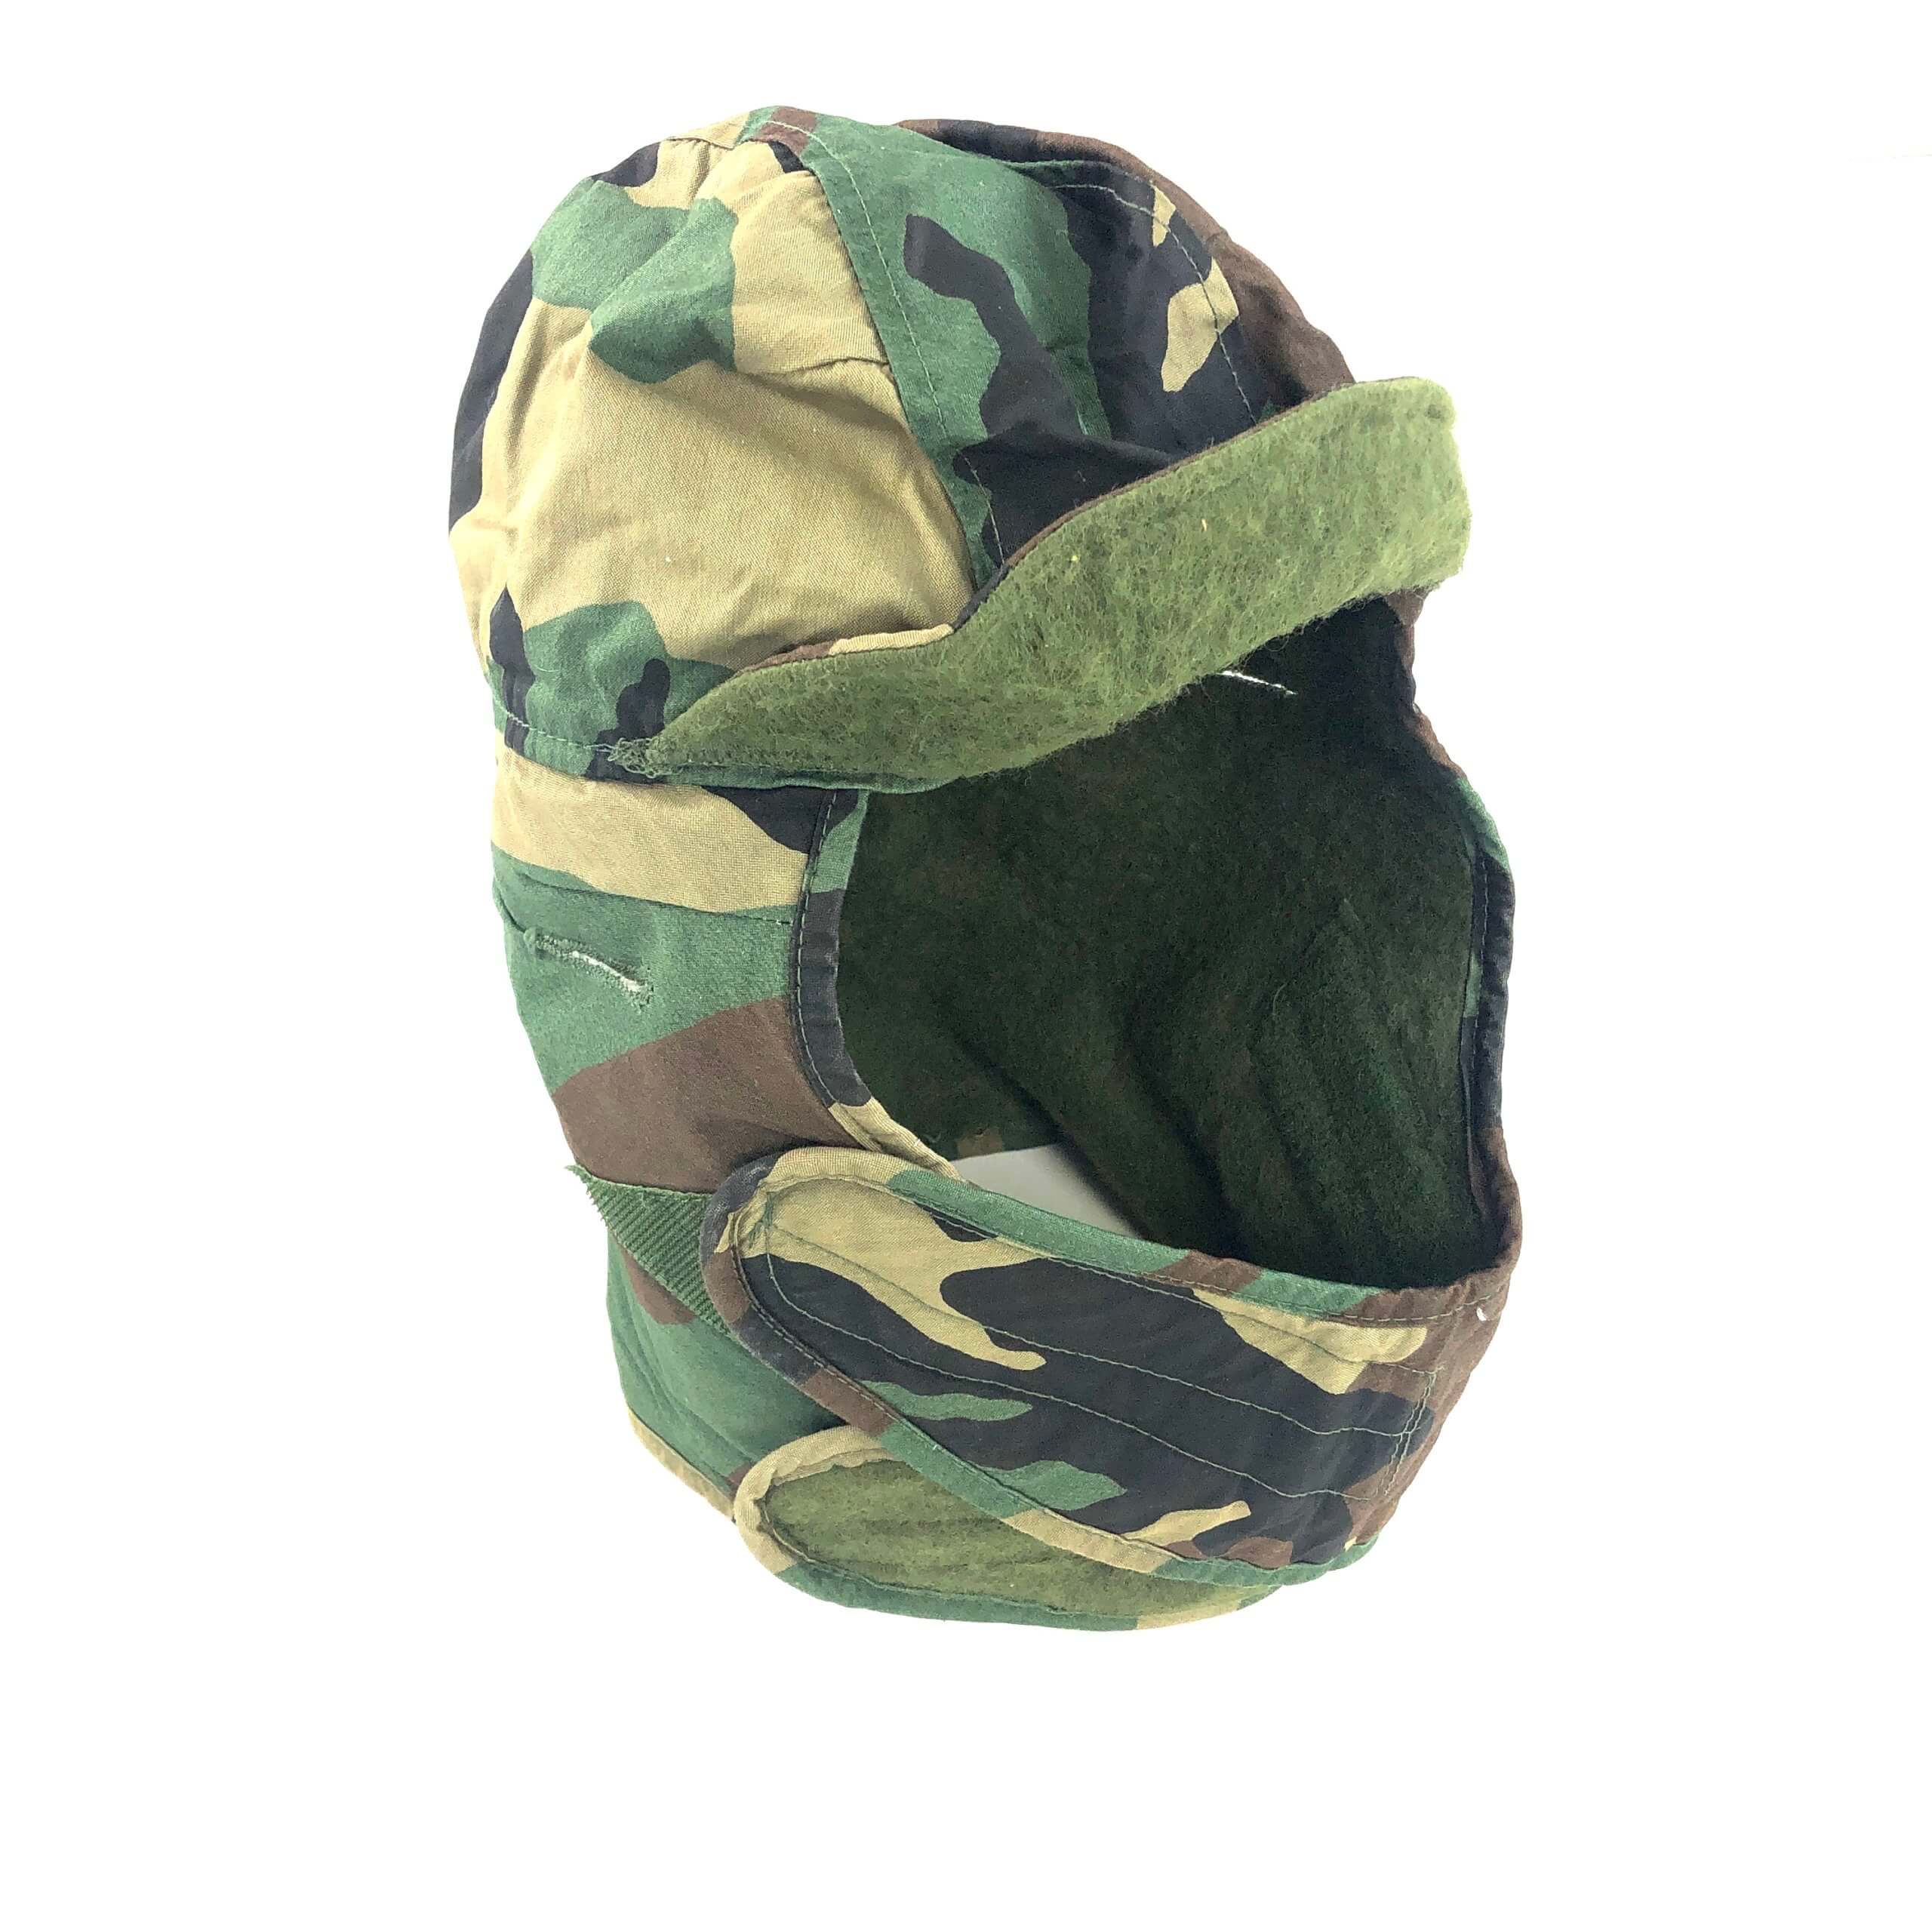 military helmet liner size 6 3/4" camo BDU woodland insulated cap 